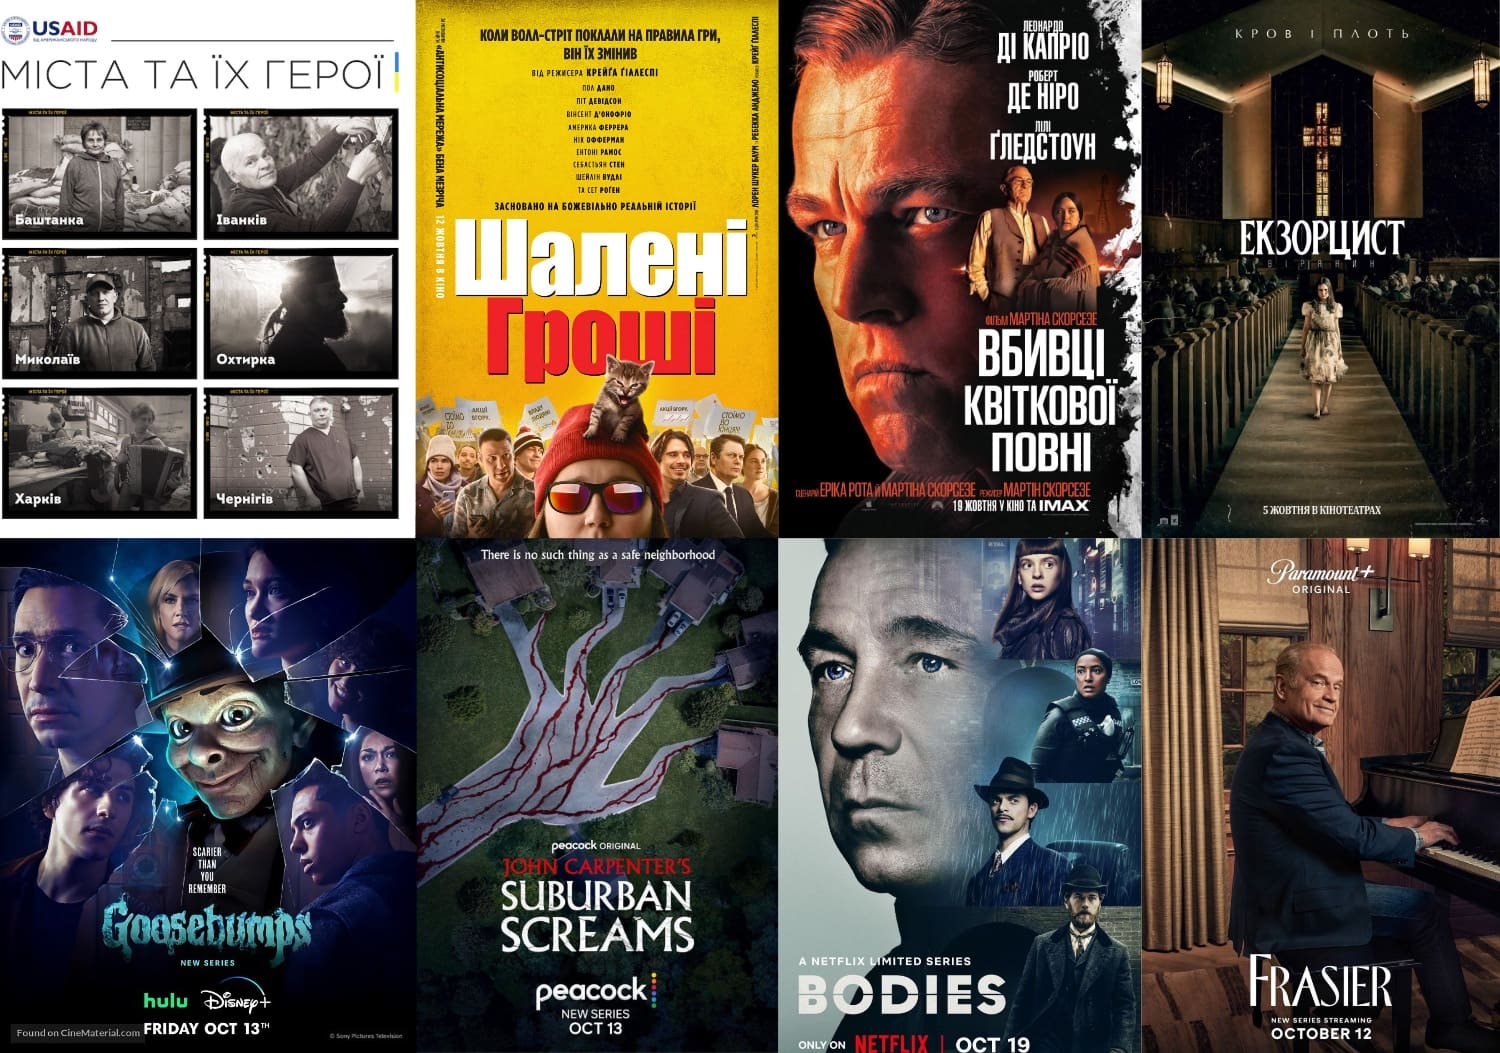 John Carpenter's Suburban Screams Release Date, Trailer, Director, And More  Info